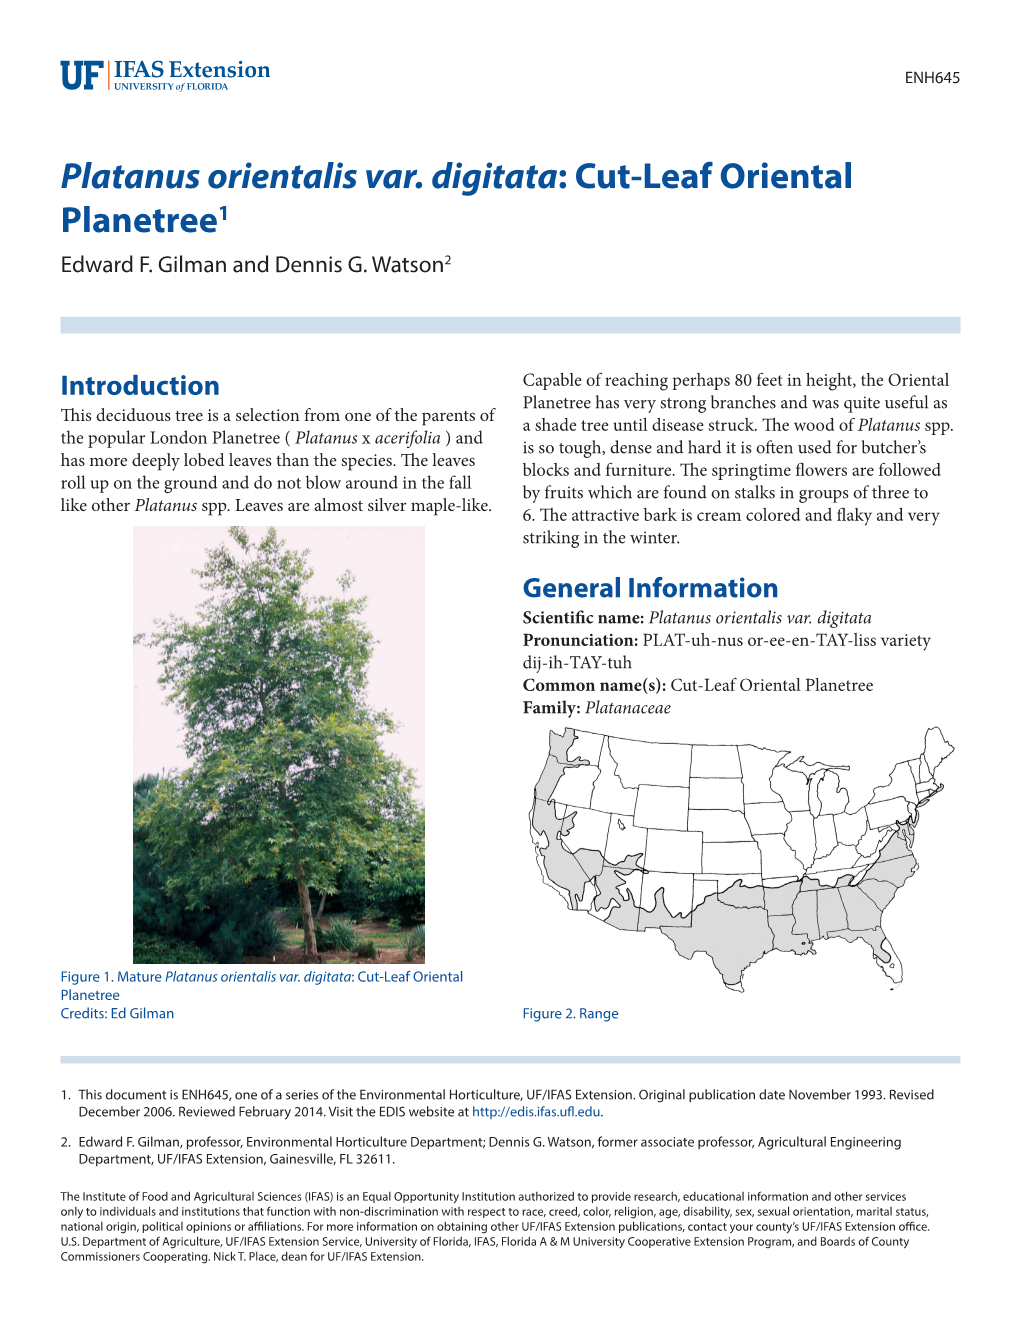 Platanus Orientalis Var. Digitata: Cut-Leaf Oriental Planetree1 Edward F